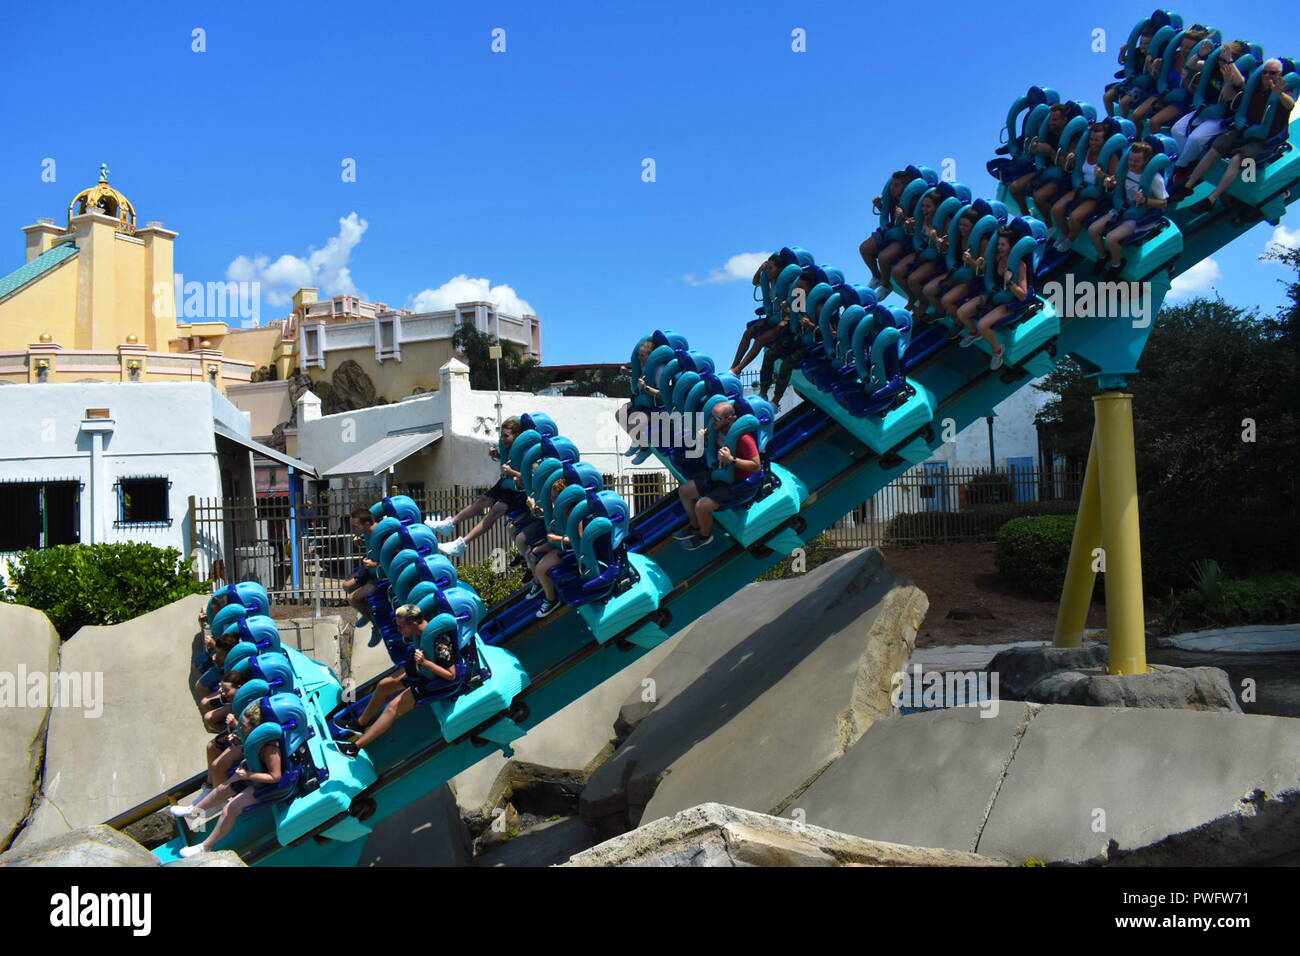 Orlando, Florida. September 21, 2018. People ride Kraken Roller Coaster at Seaworld Theme Park. Several are screaming. Stock Photo